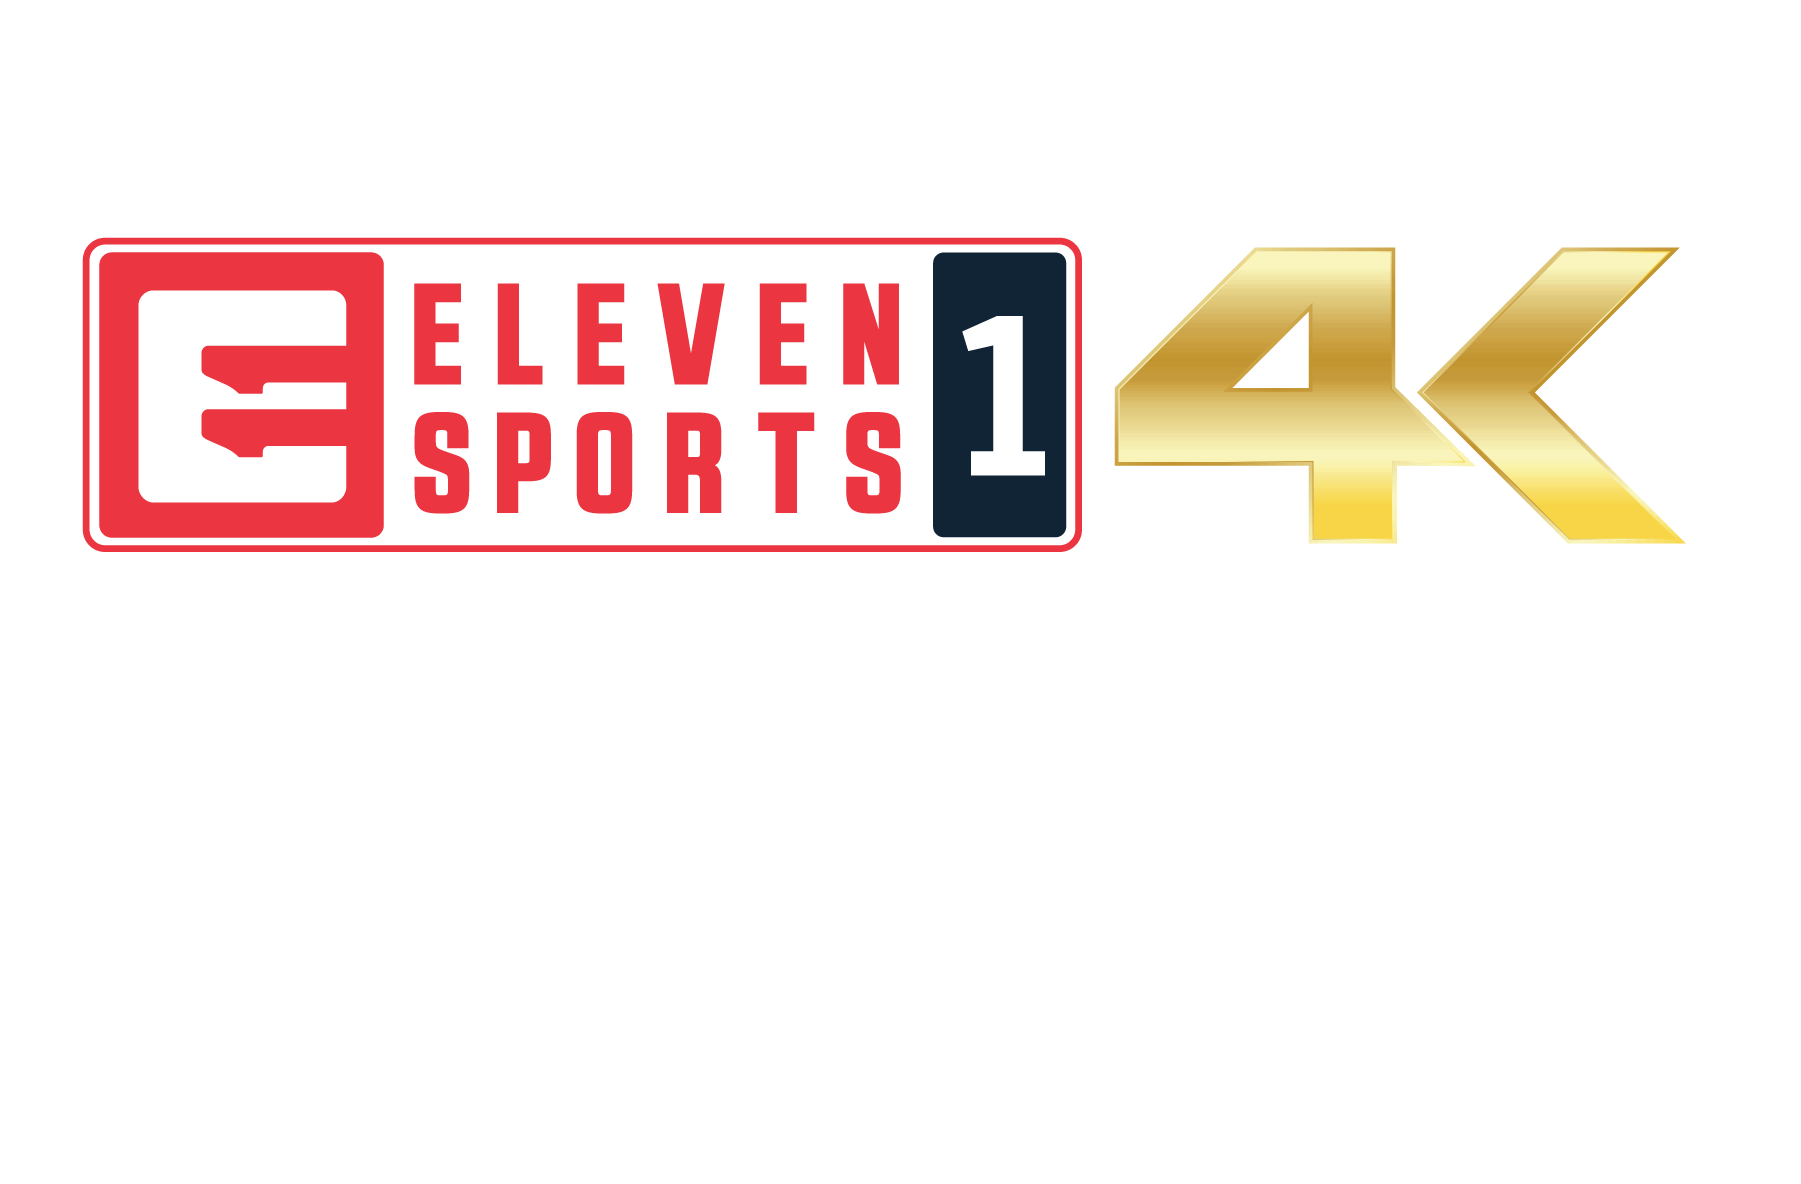 11 4 5 11 1 25. Eleven Sports. Eleven Sports 1.